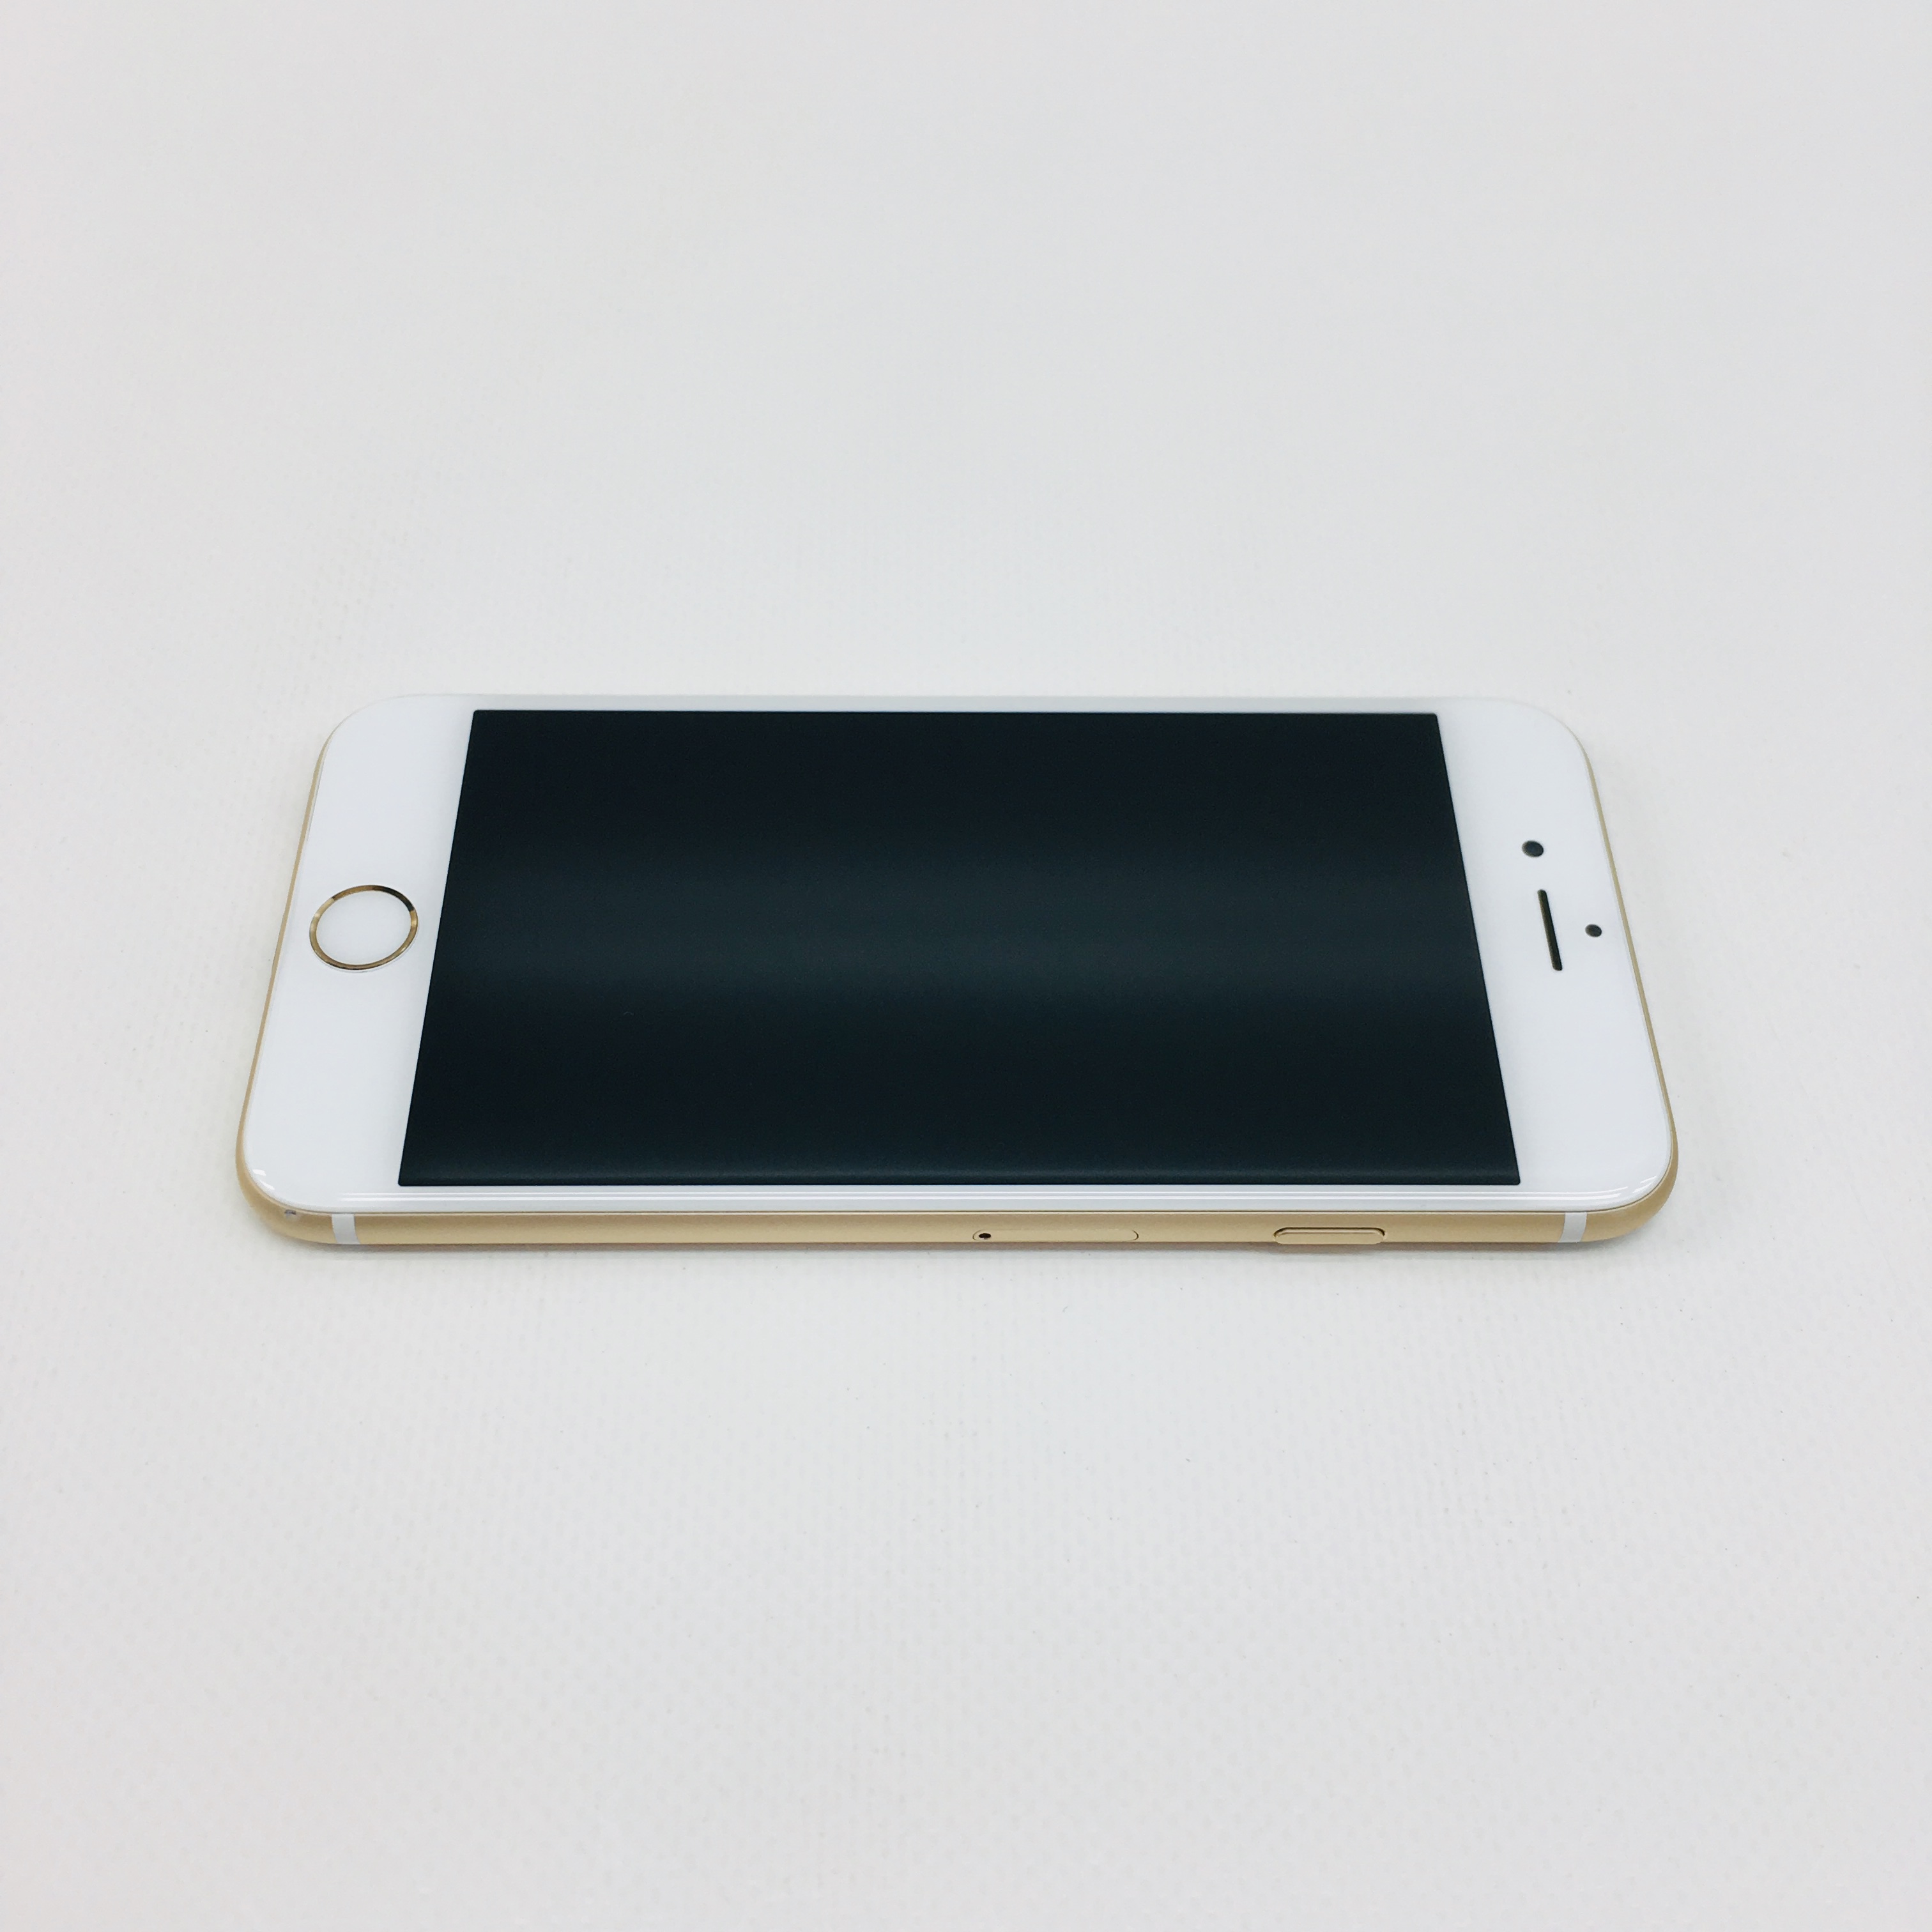 Fully Refurbished iPhone 6S 64GB / GOLD - mResell.com.au